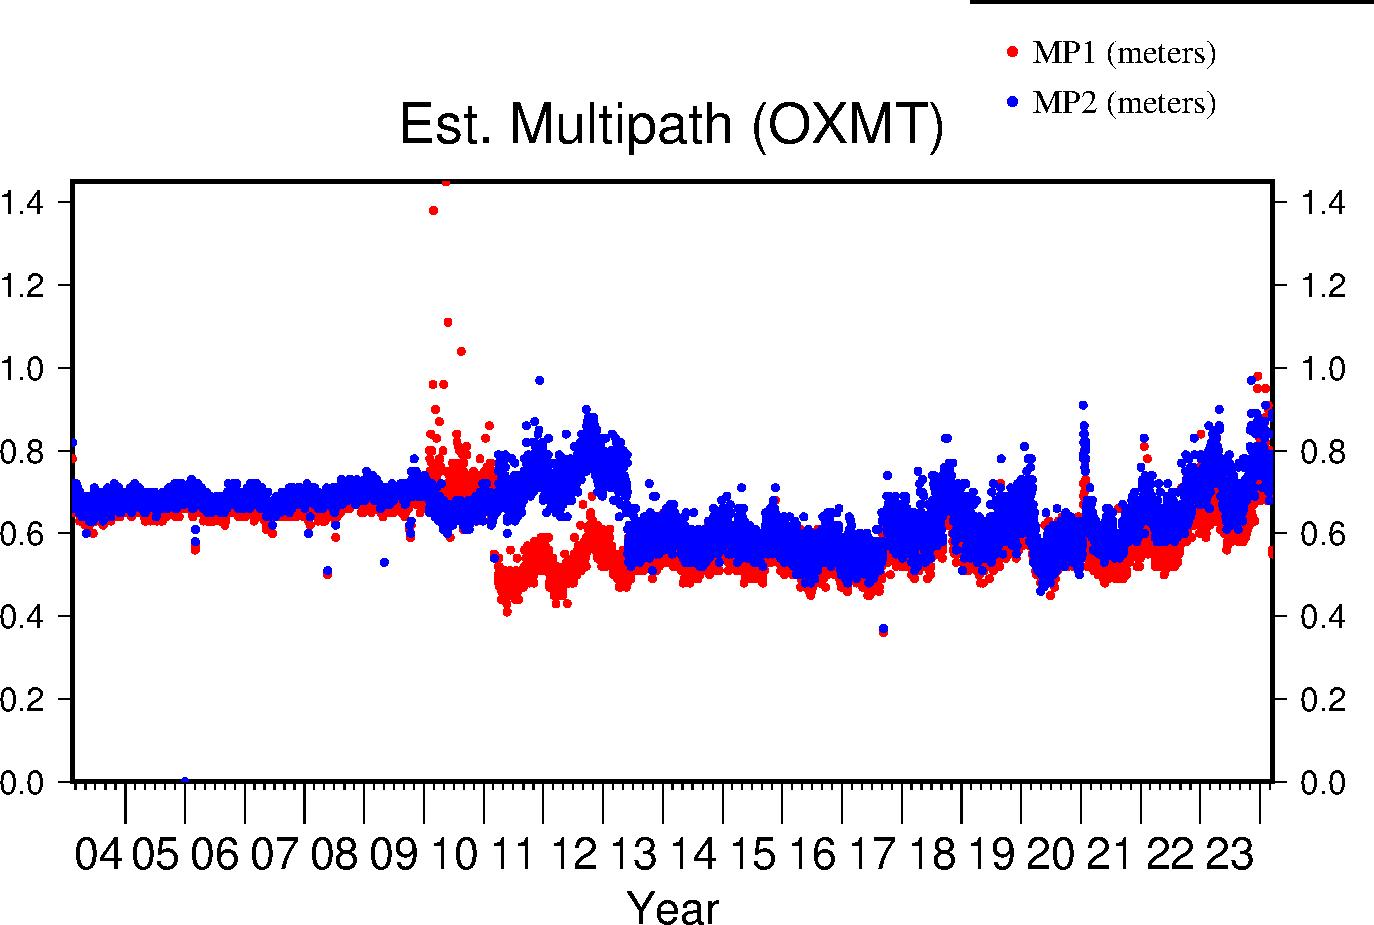 OXMT multipath lifetime